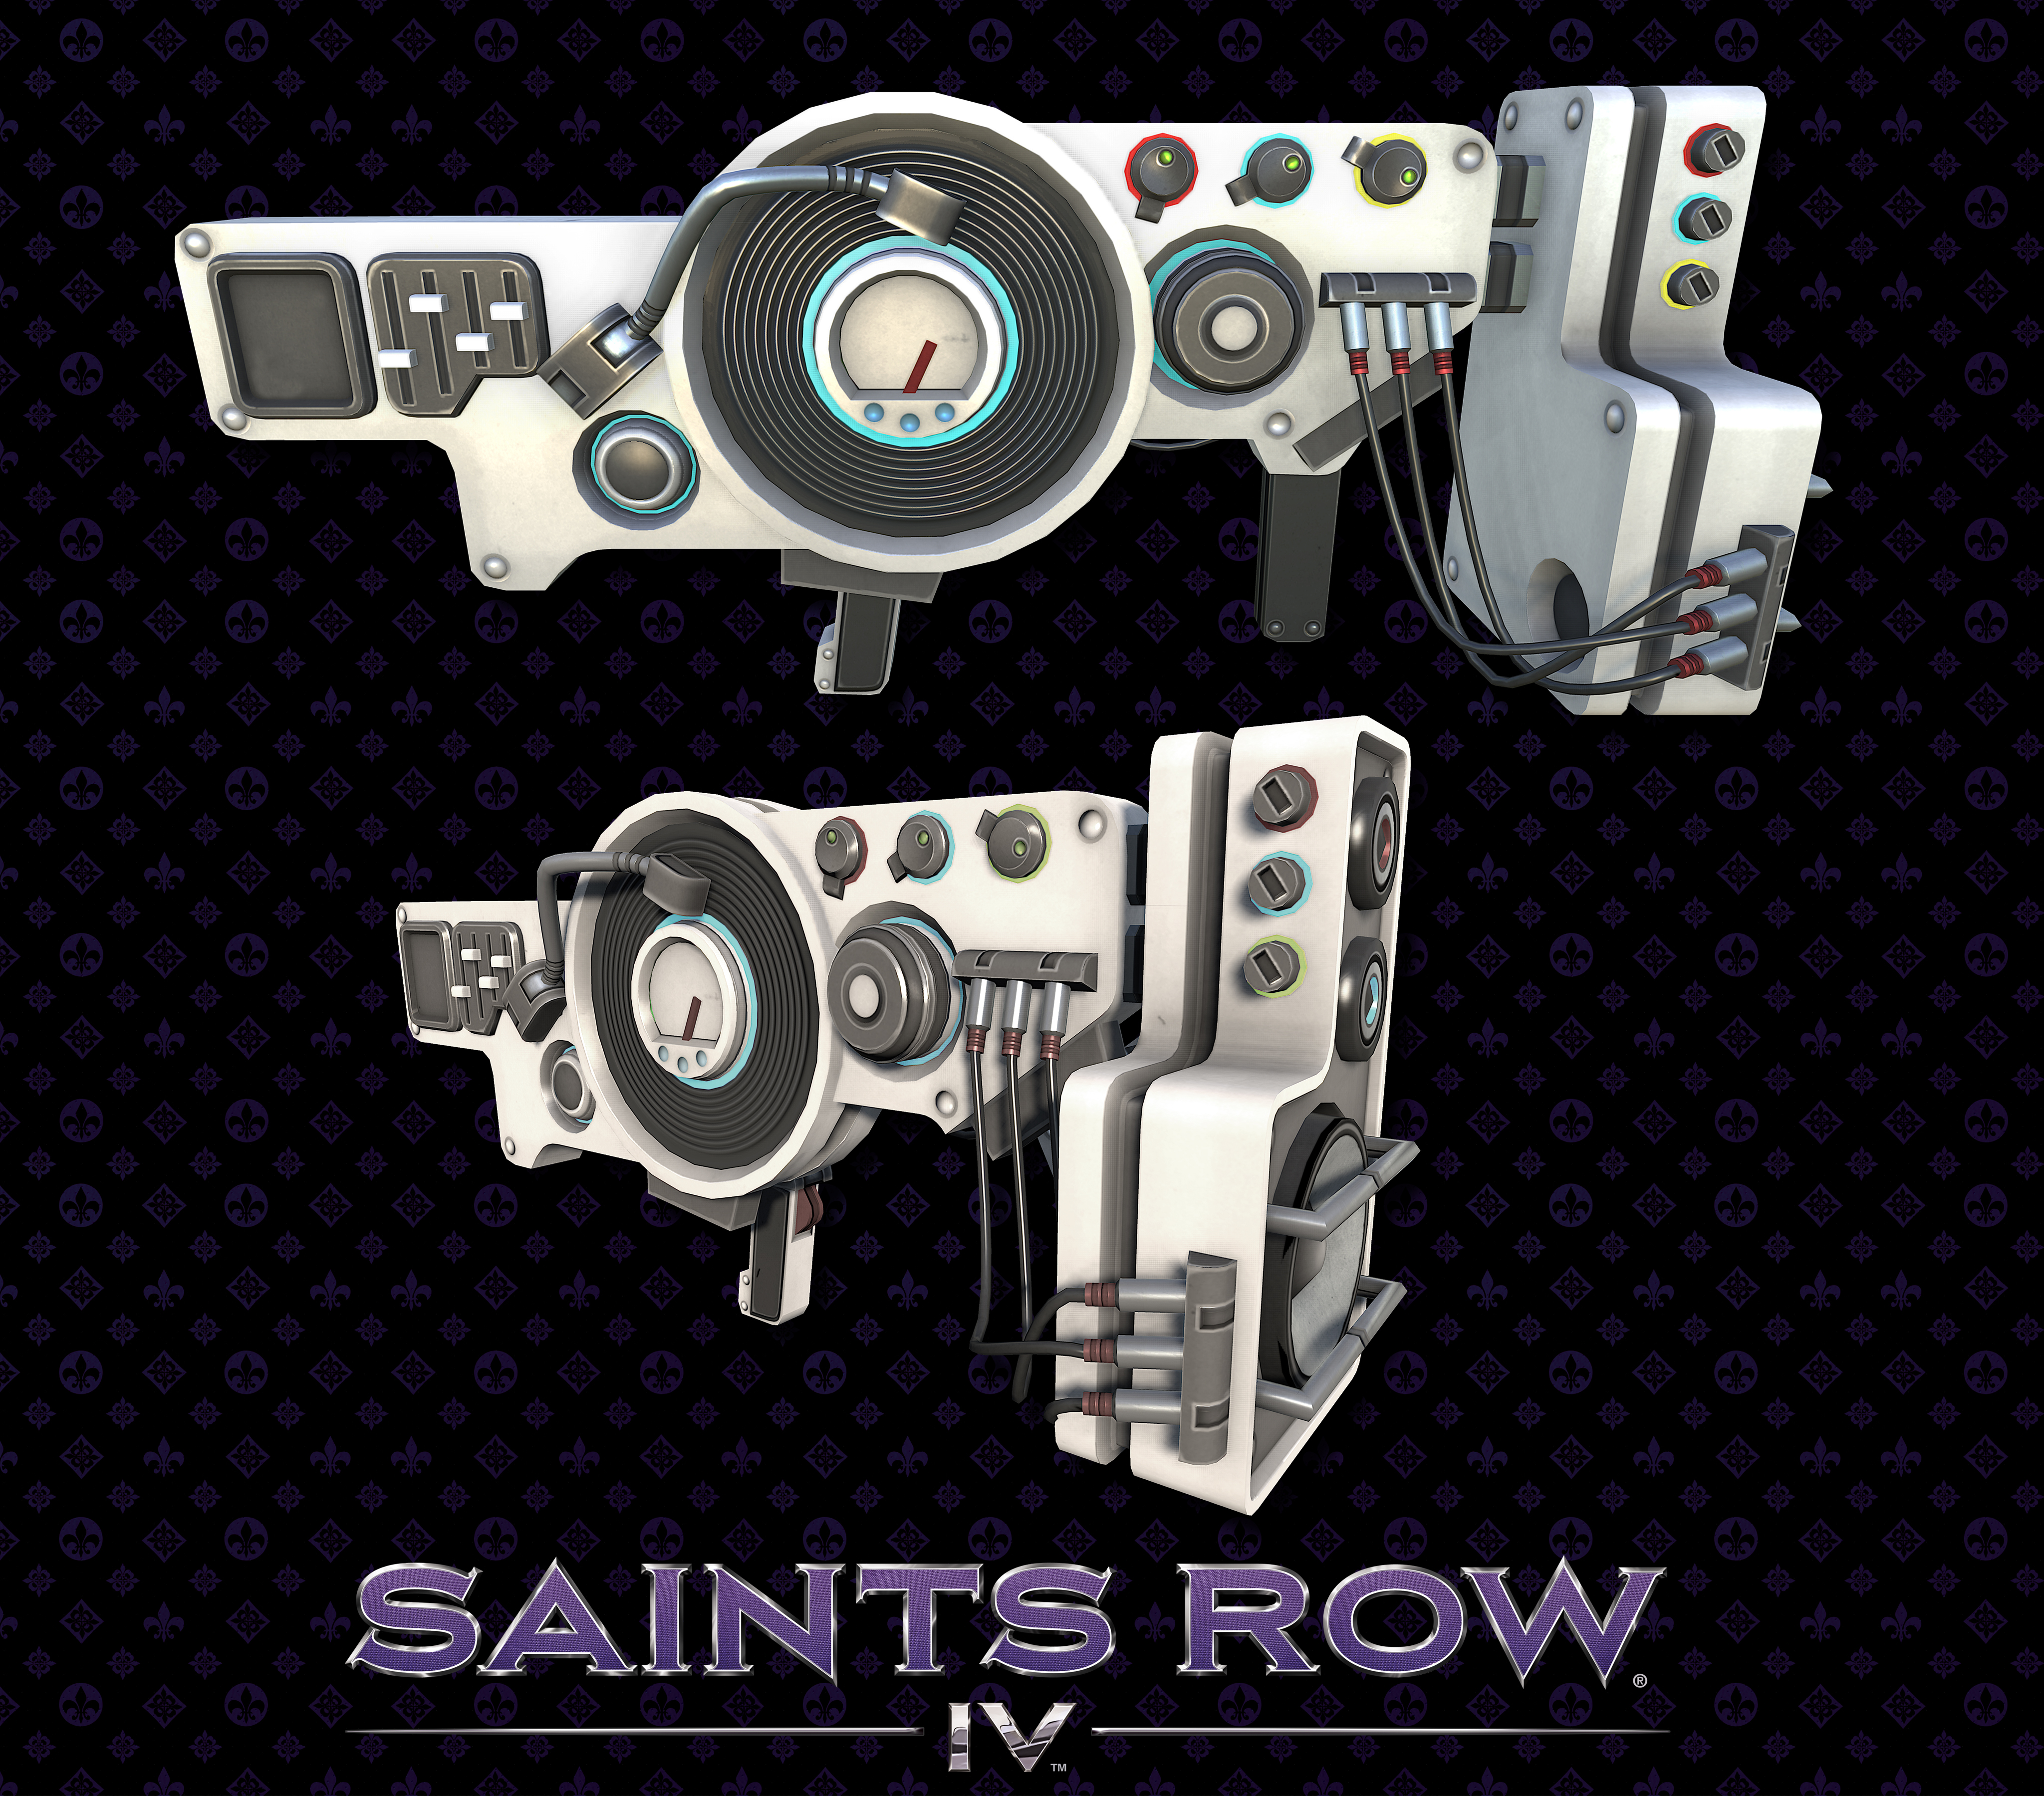 Saints Row IV' Gameplay Demo Shows Off Super Powers, Dub Step Gun